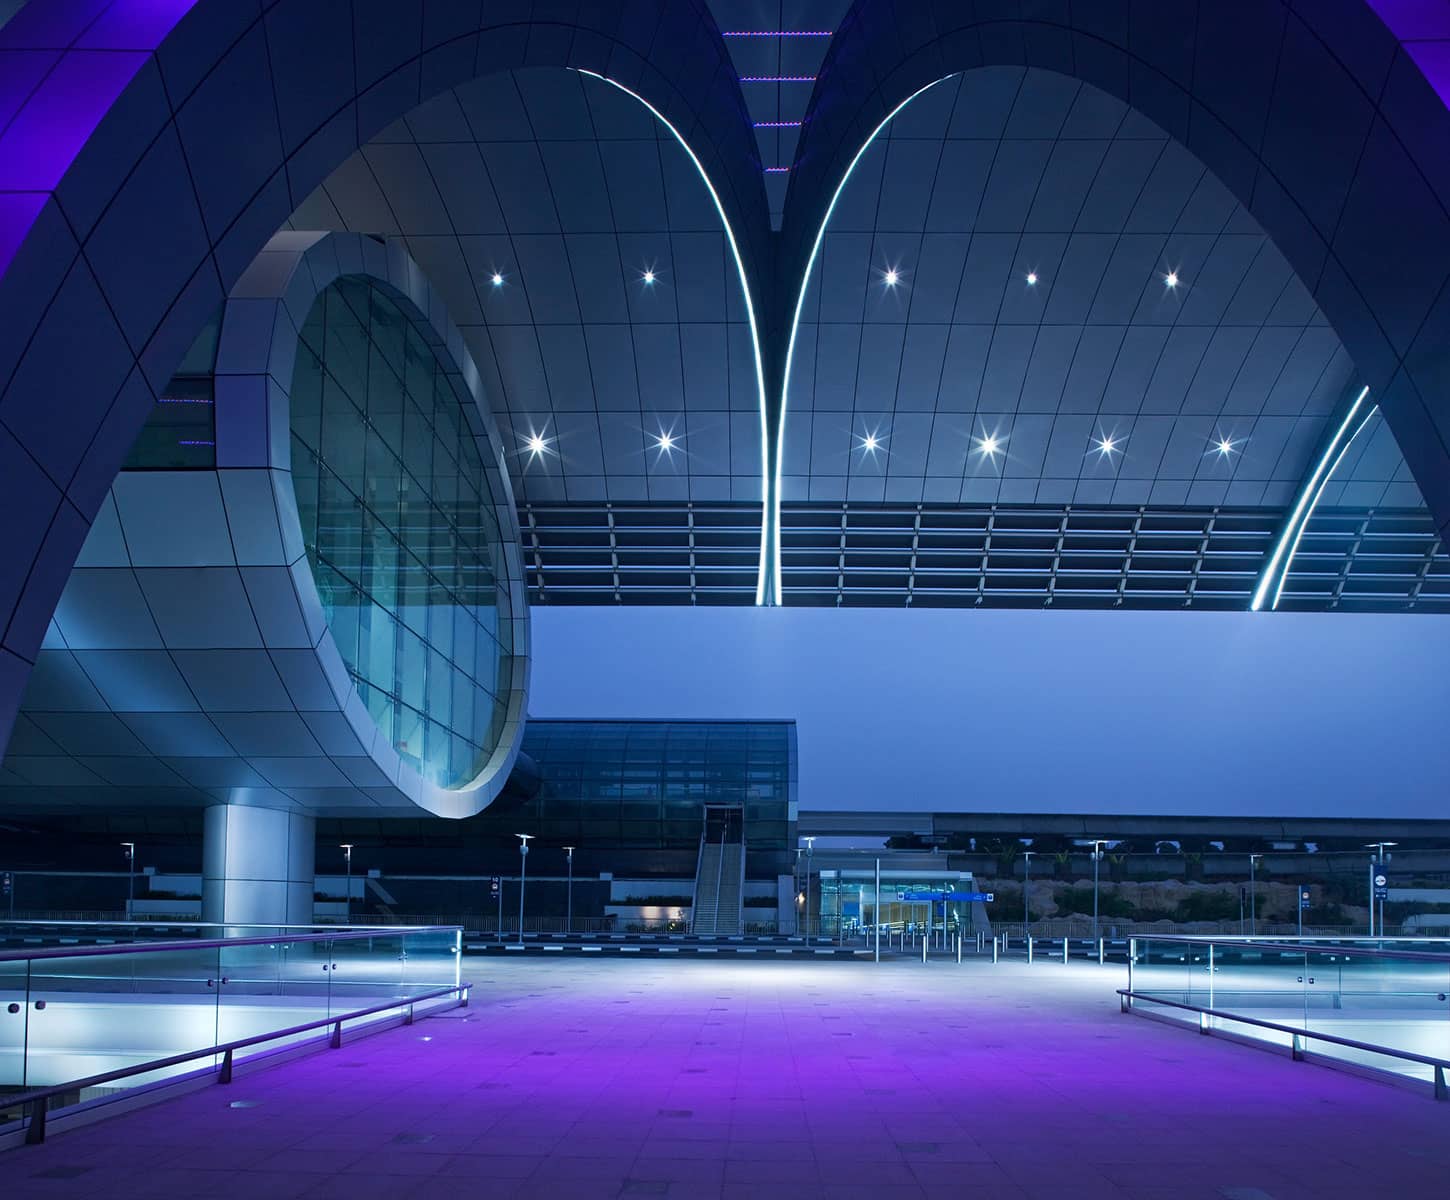 Architecture Photography Dubai: An abstract perspective of Dubai international airport terminal 3.